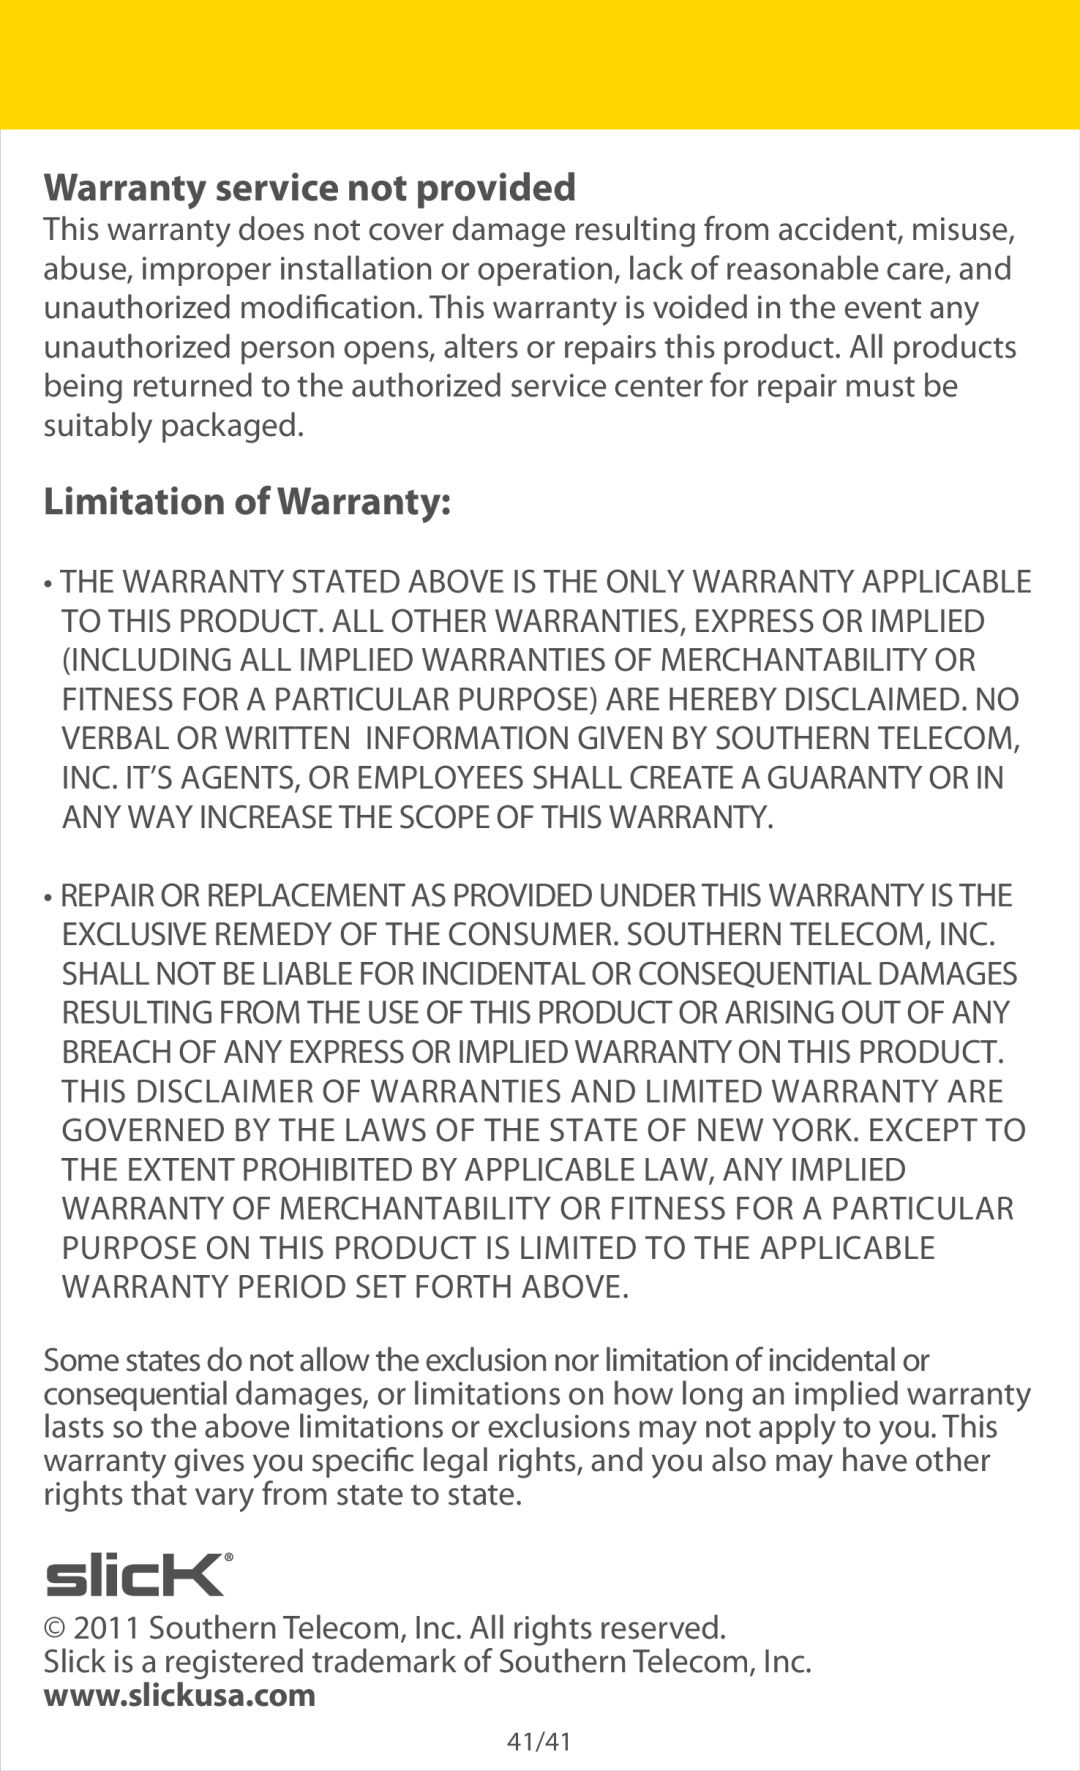 Slick ER701 manual Warranty service not provided, Limitation of Warranty 